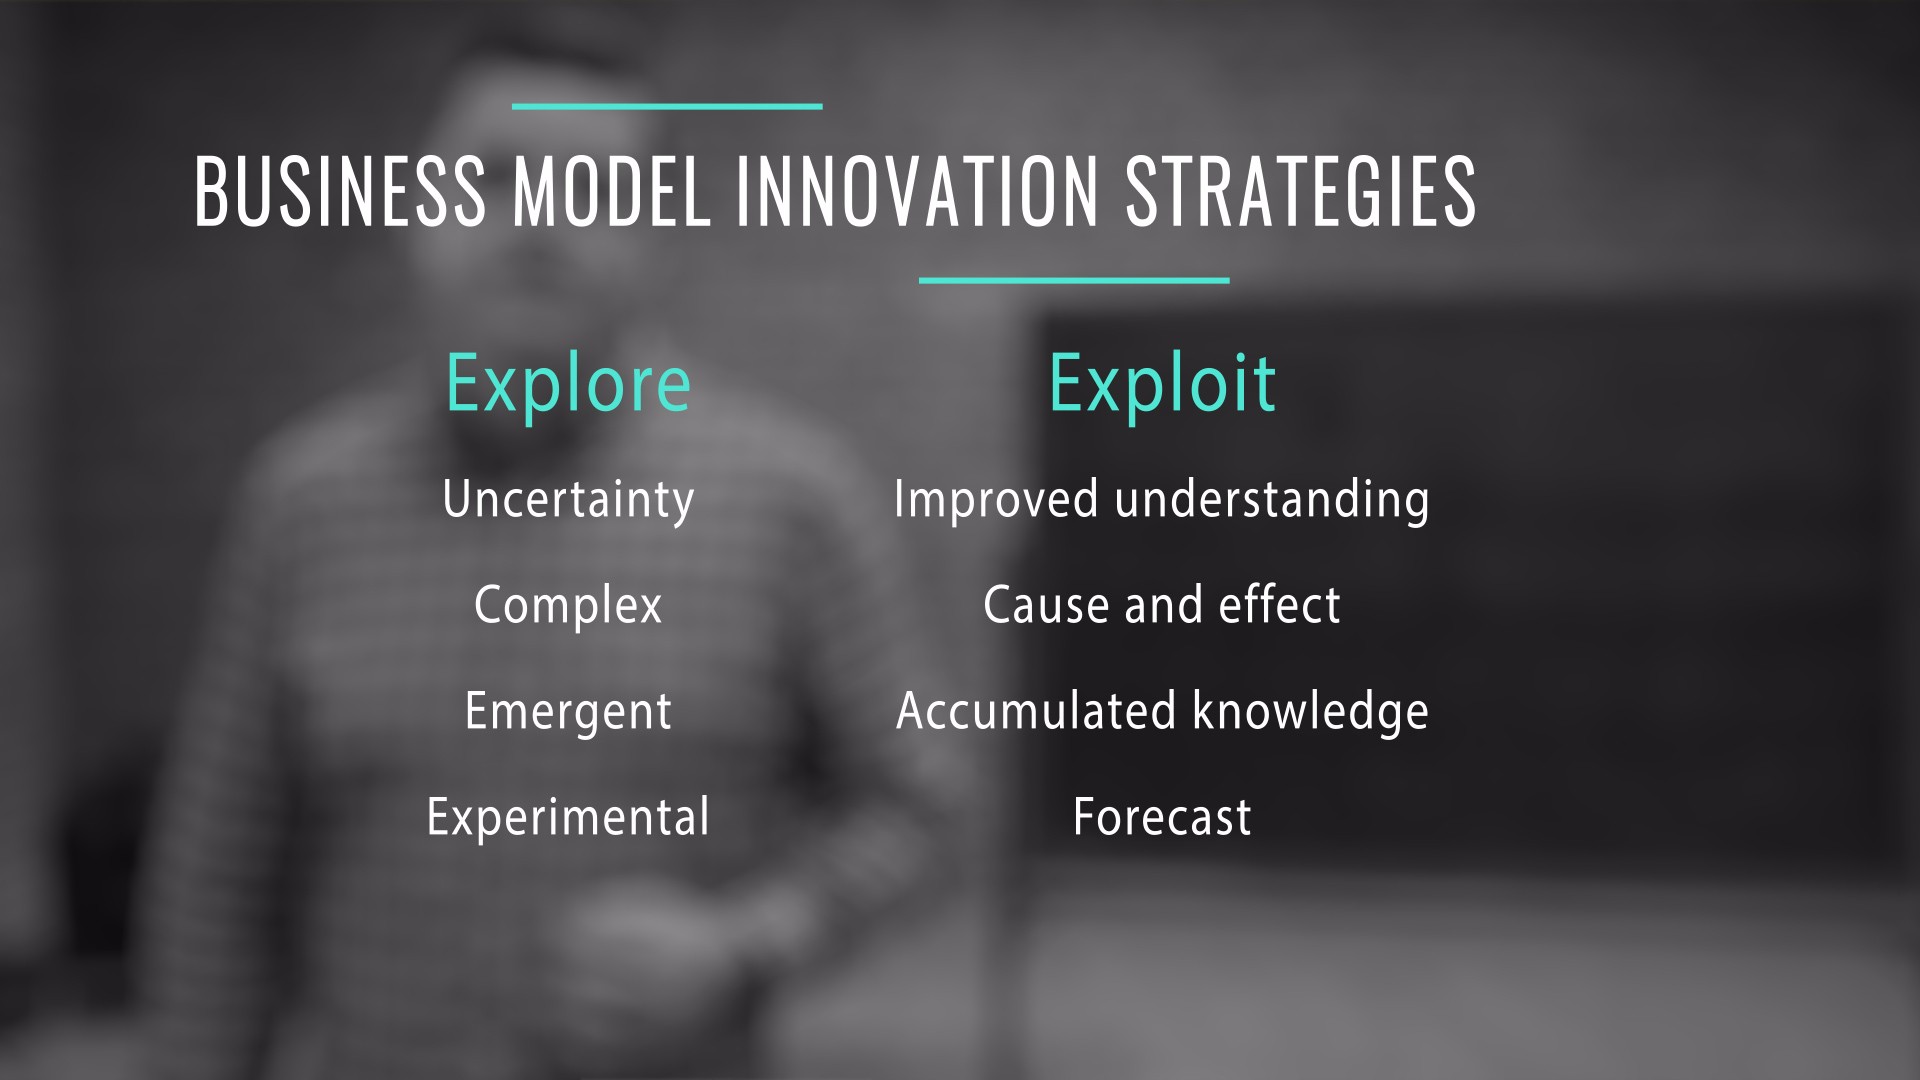 Business model innovation strategies